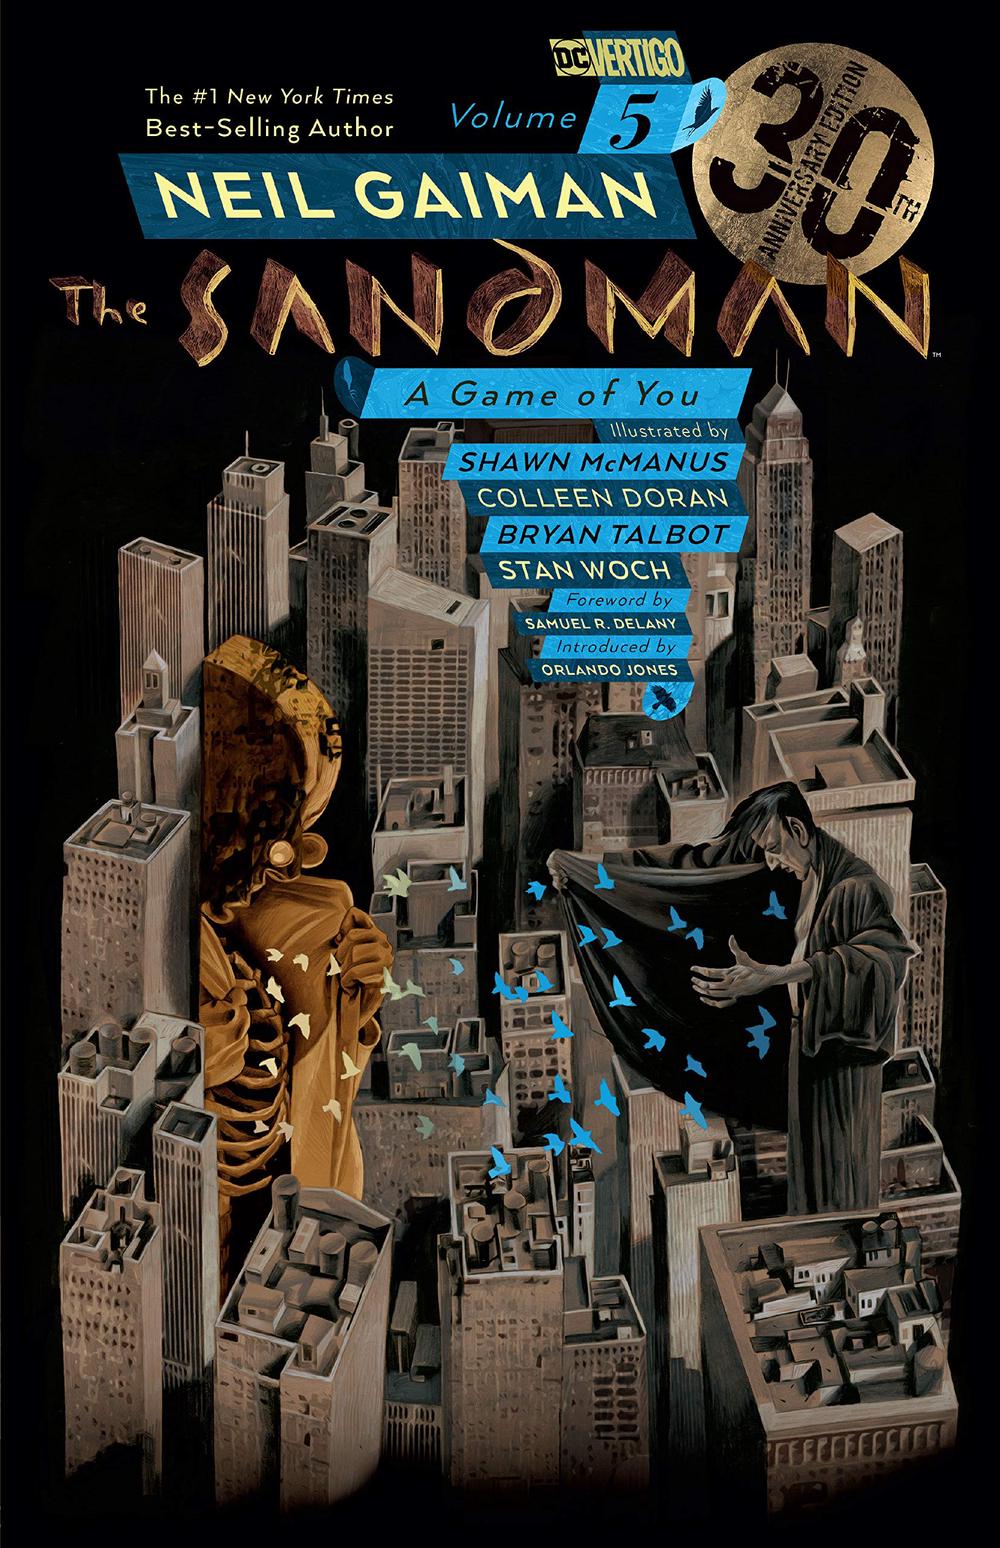 The Sandman Vol. 5 by Neil Gaiman